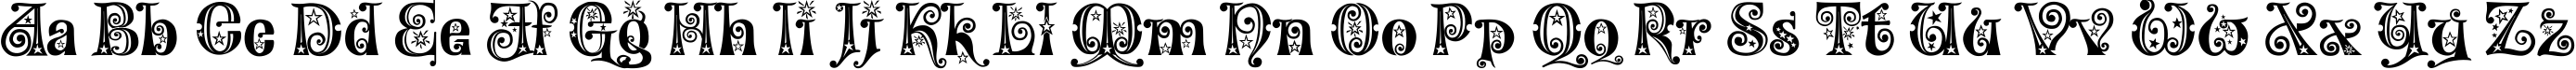 Пример написания английского алфавита шрифтом Wonderland Stars